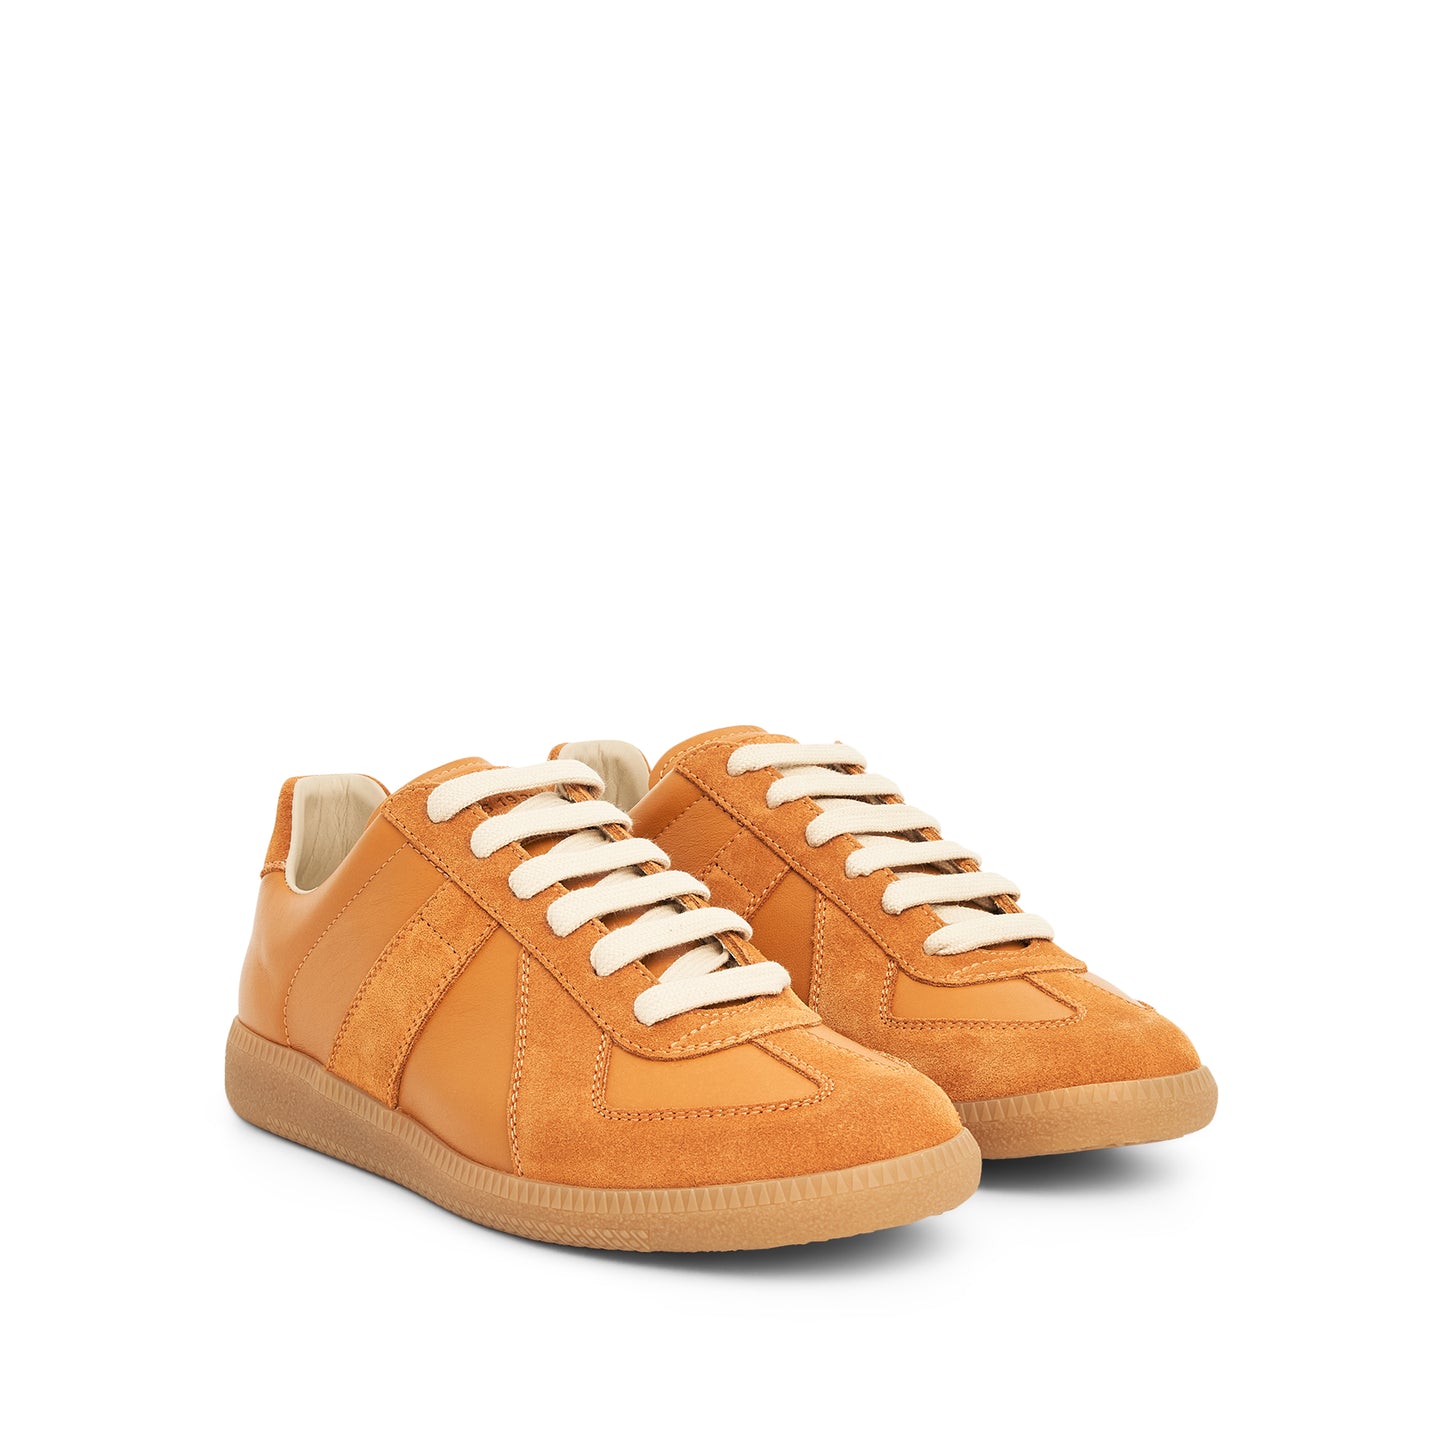 Replica Leather Sneaker in Mustard